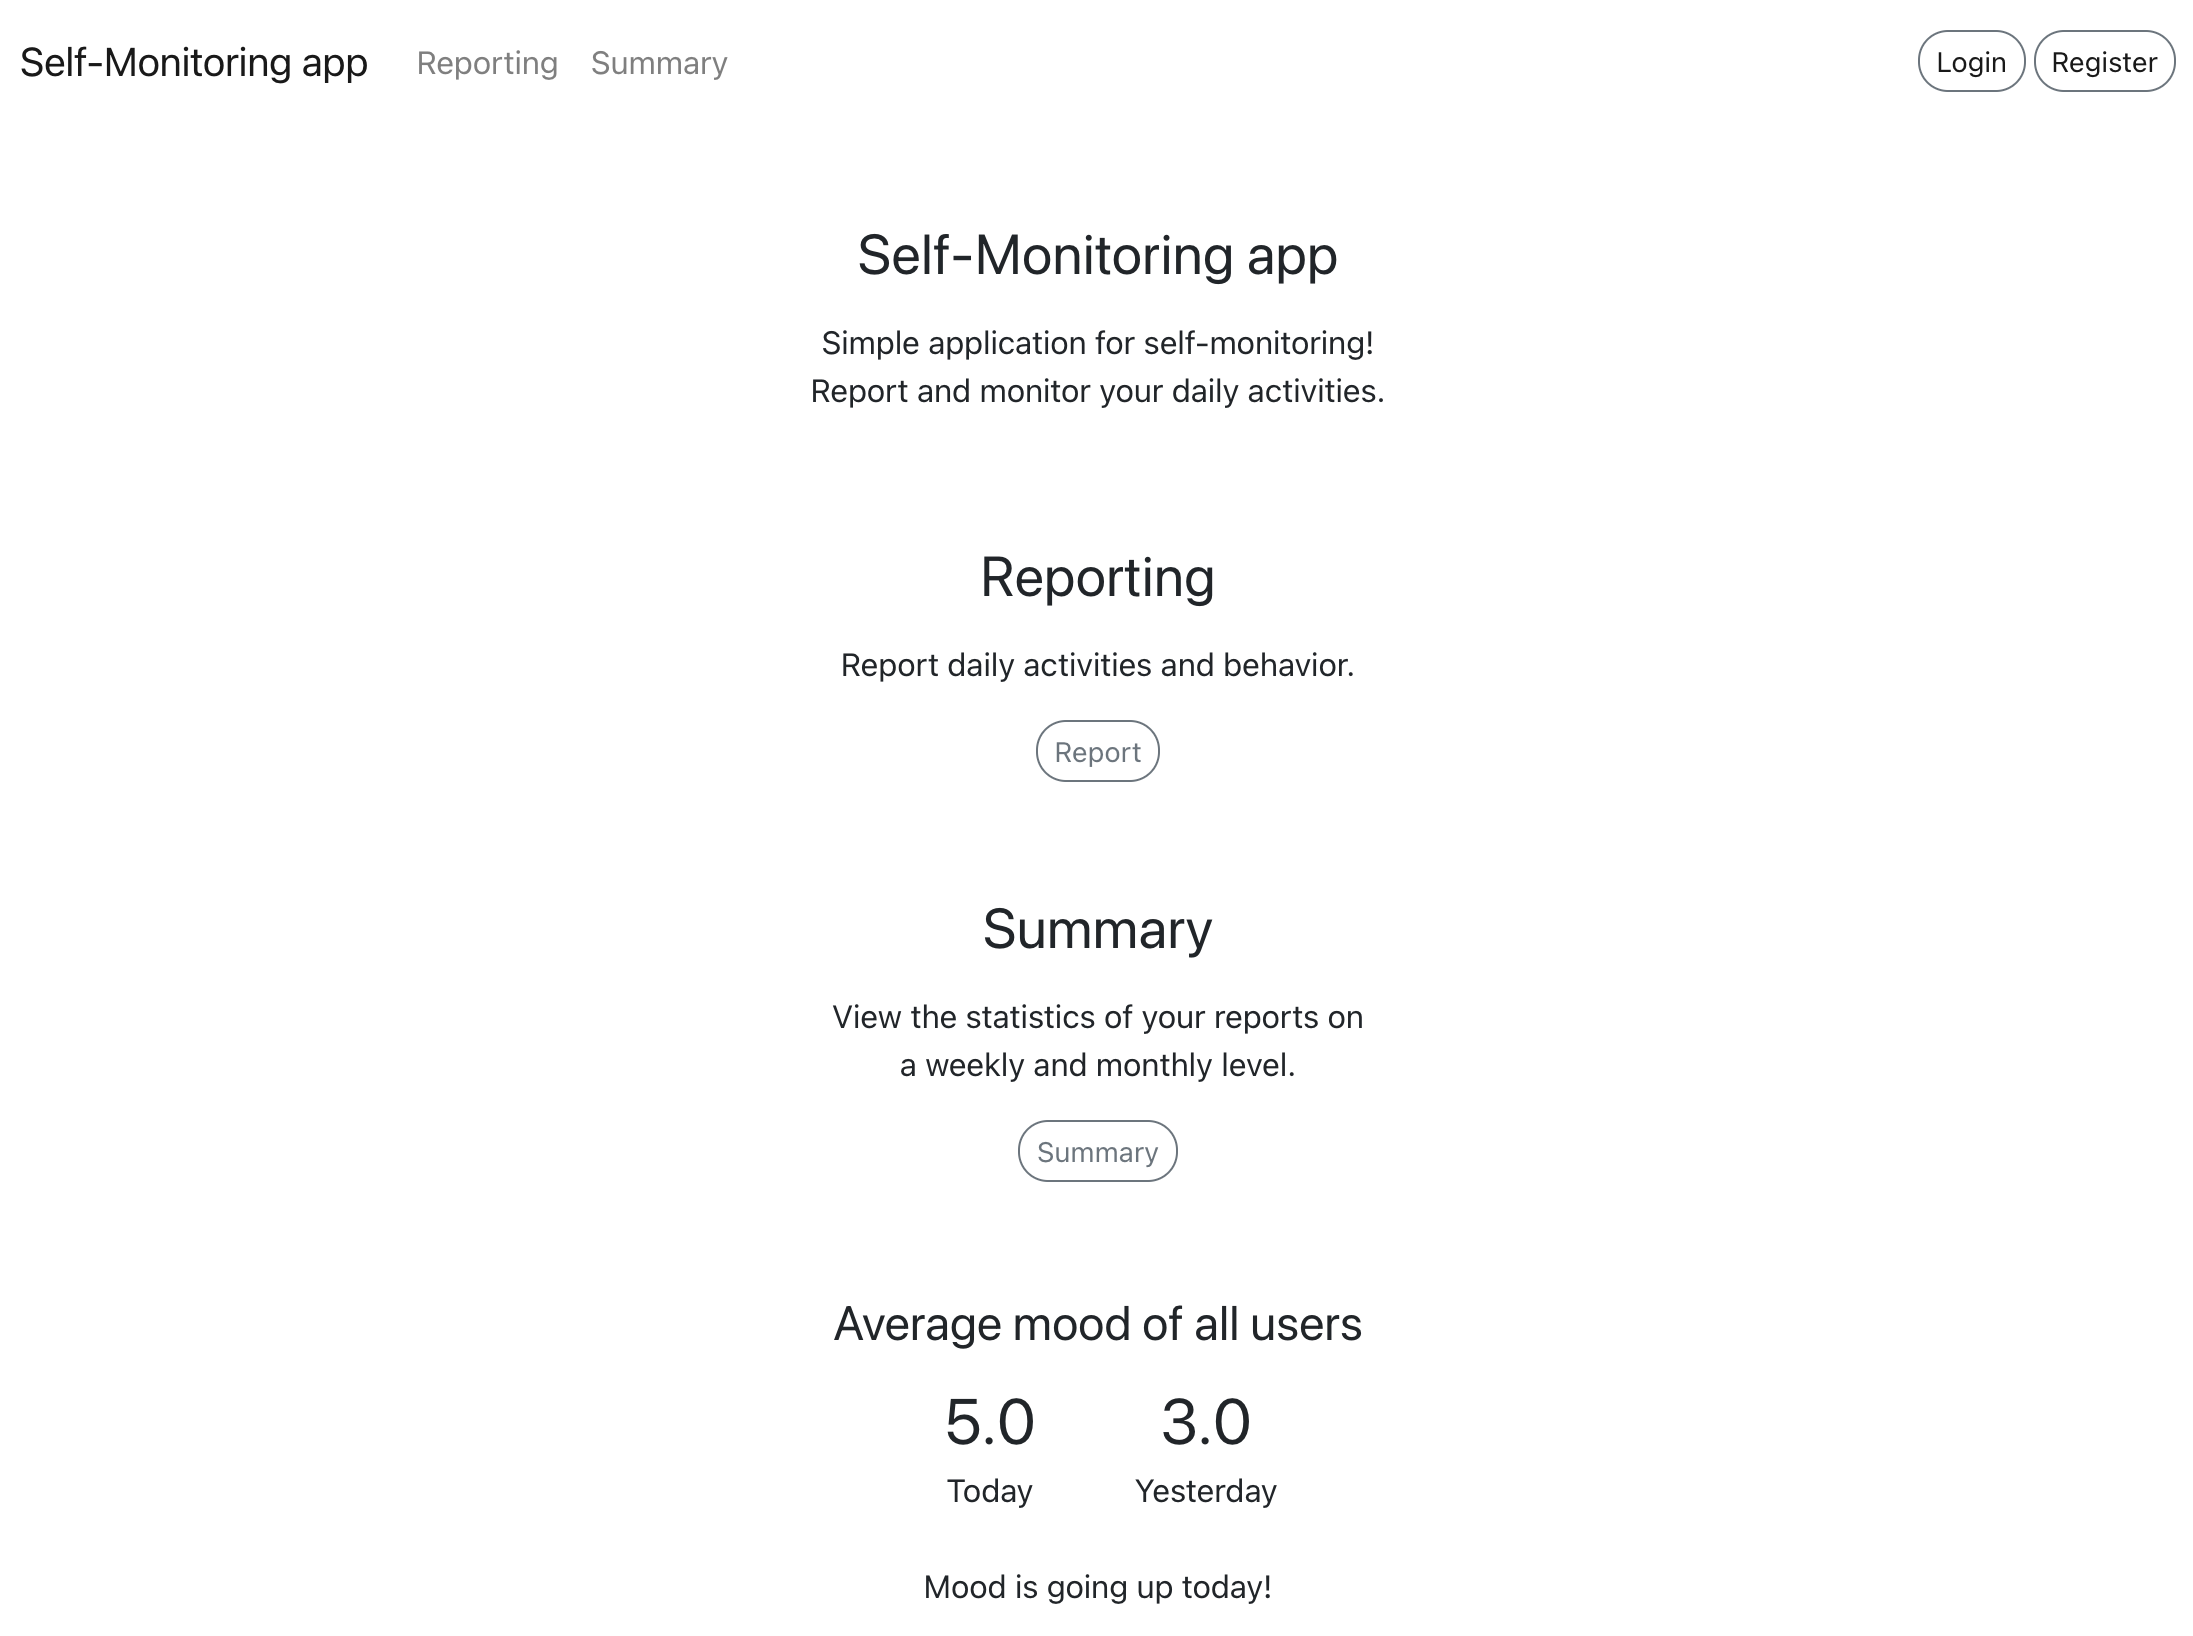 Self-Monitoring App